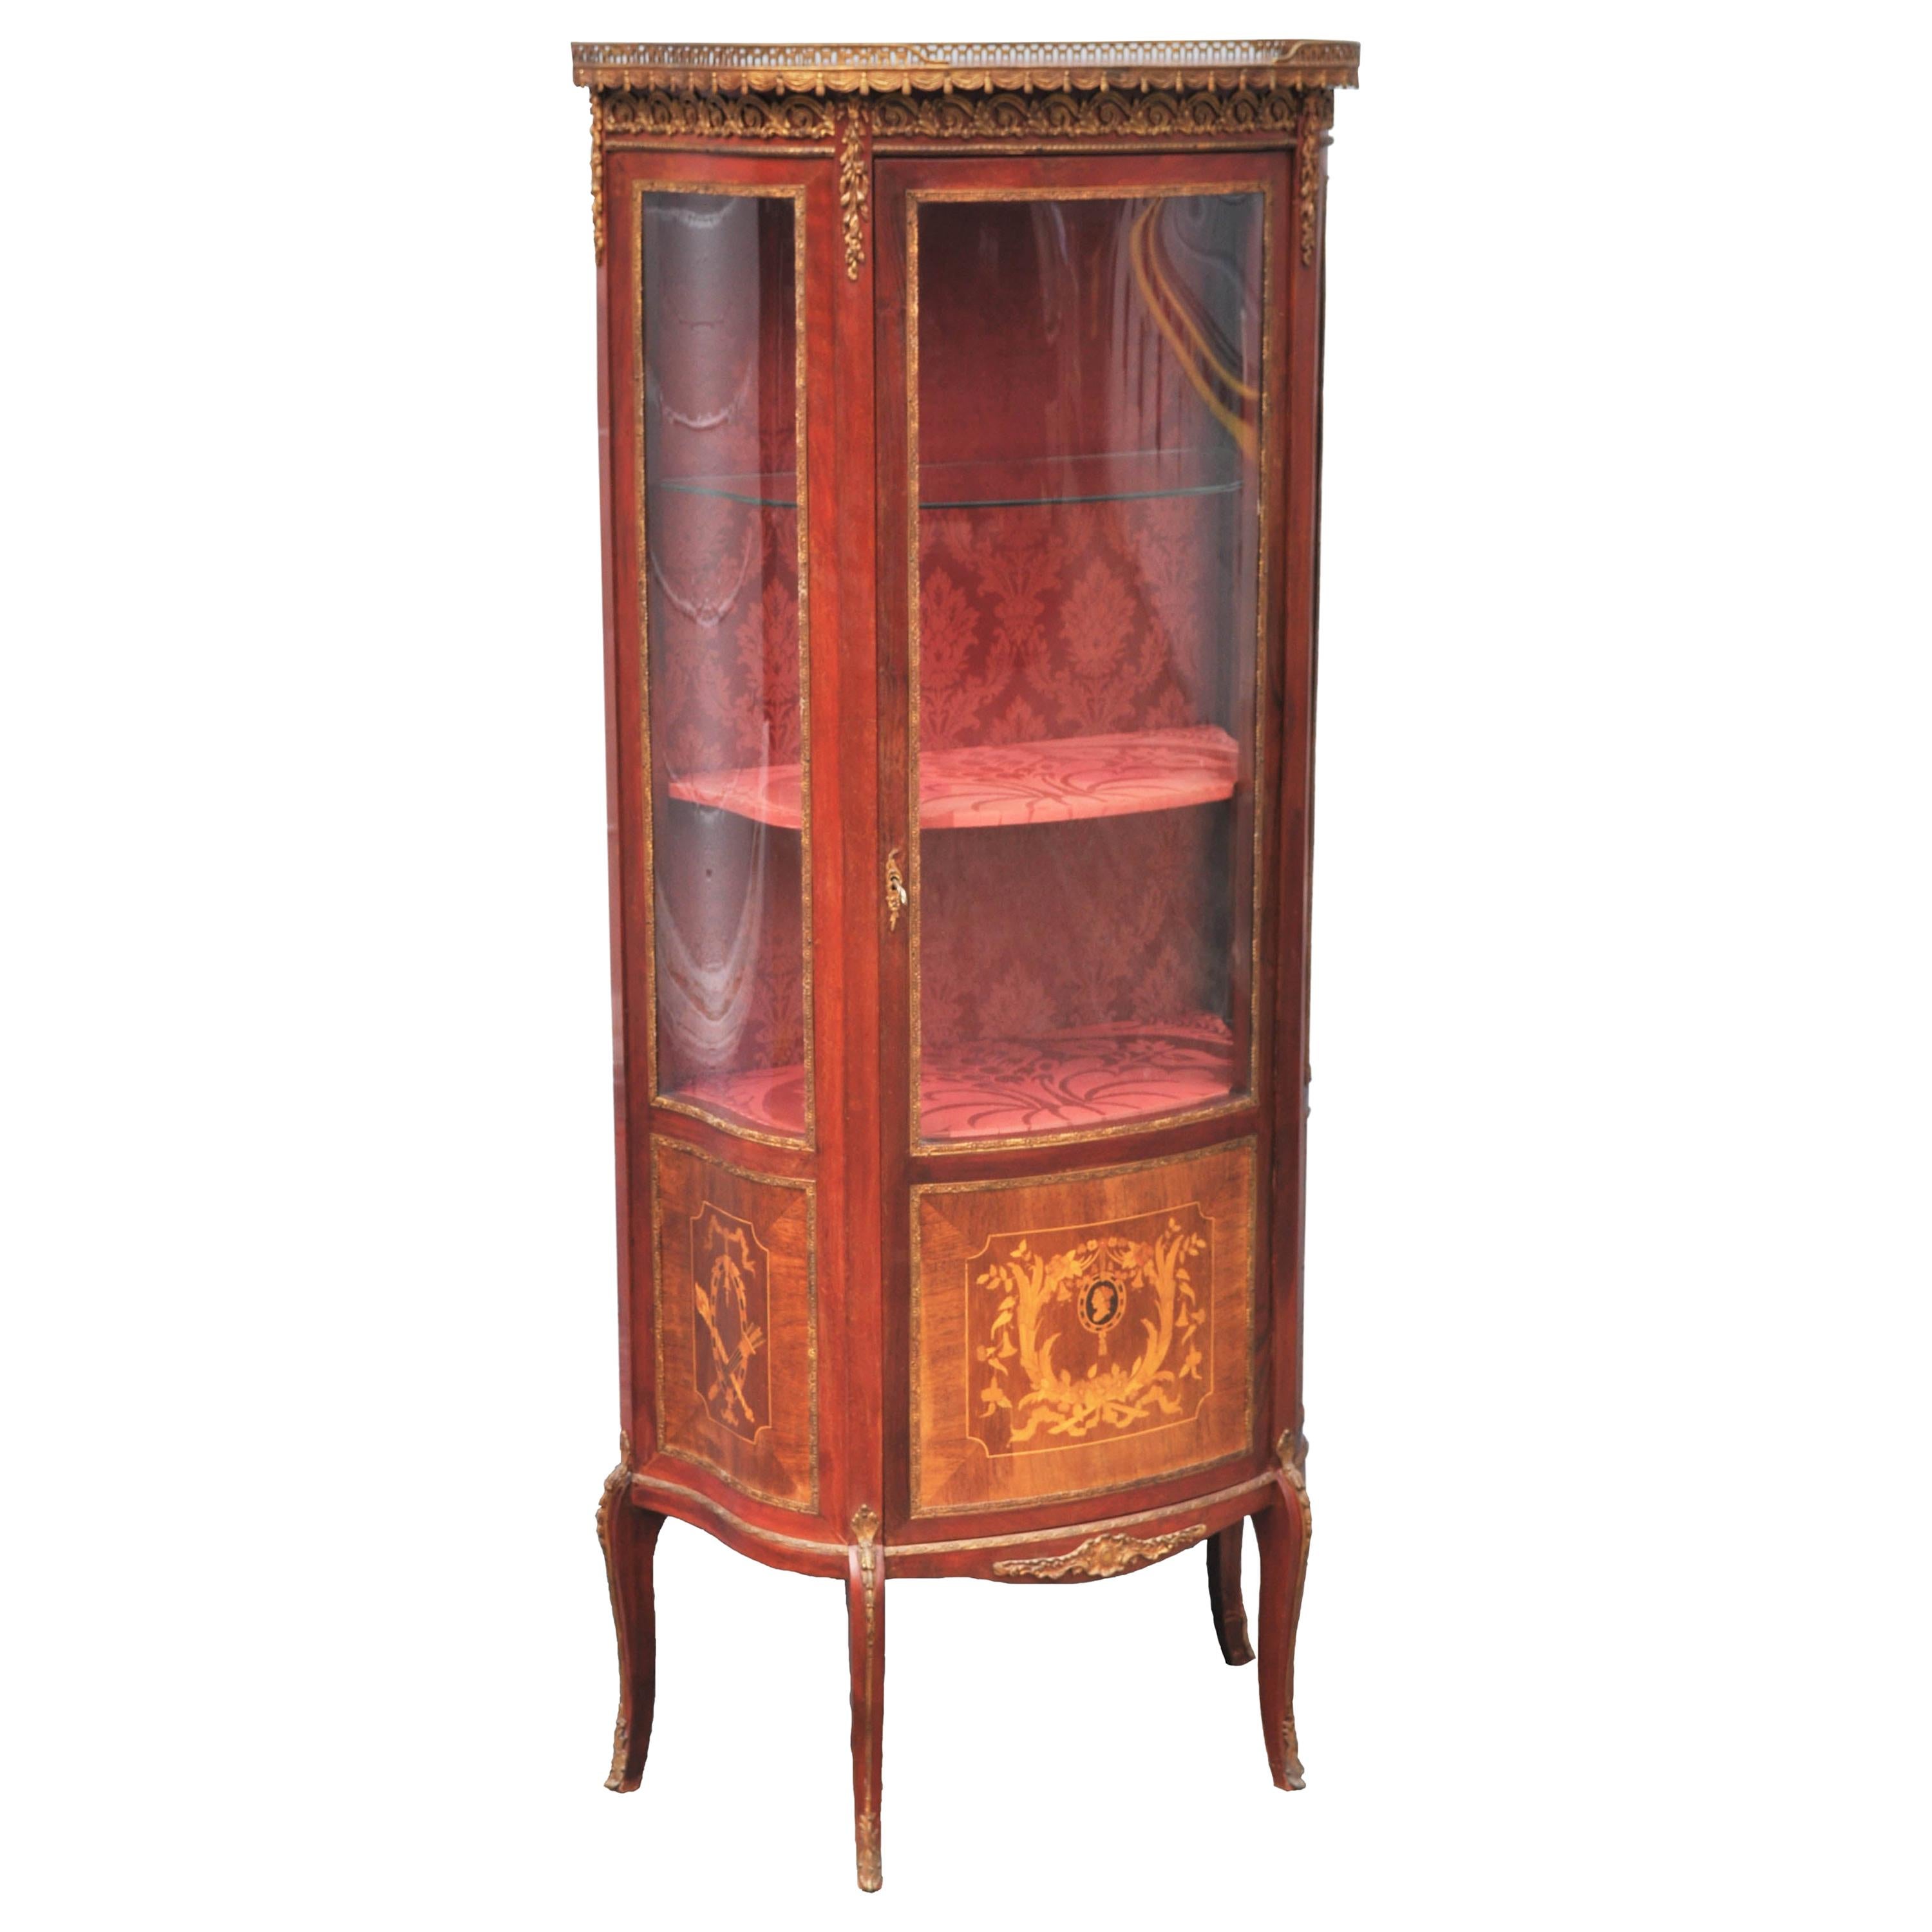 Antique Louis XV Style Vernis Martin China Display Cabinet/Vitrine, circa 1900